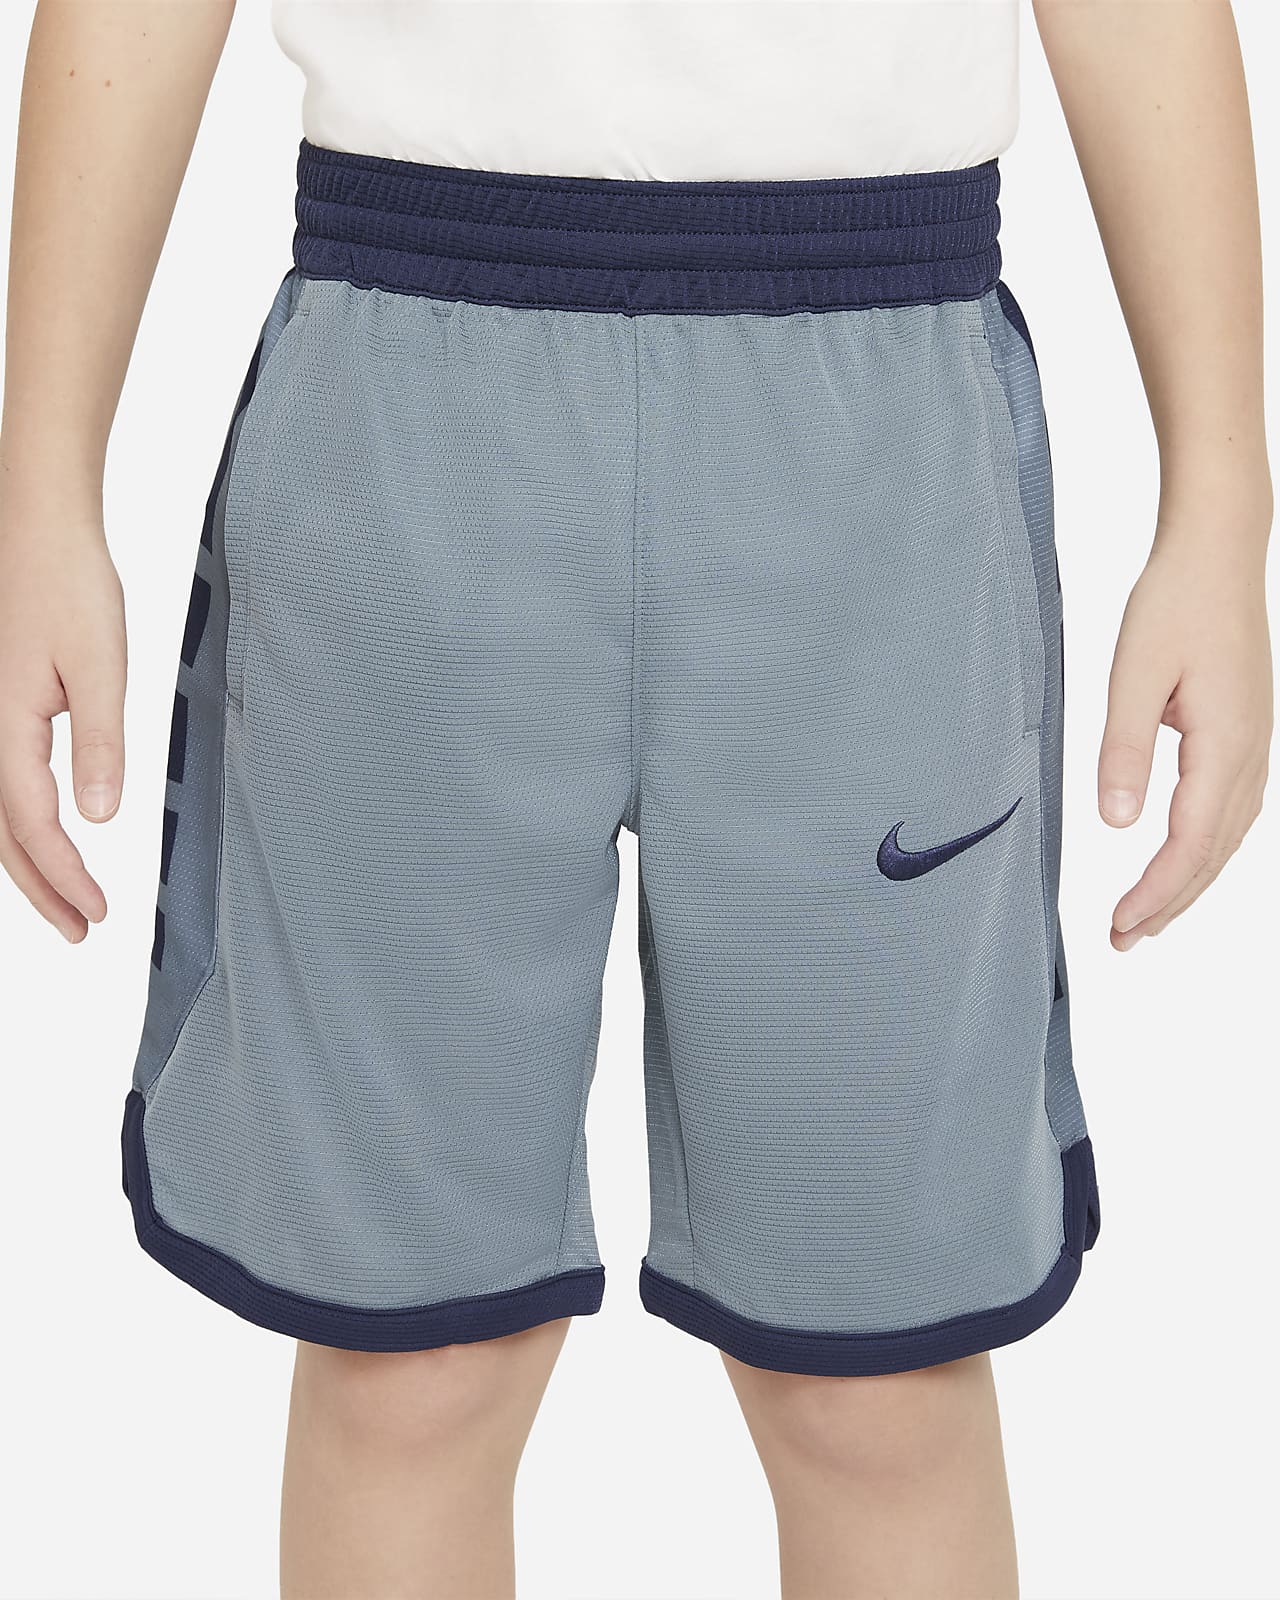 nike youth basketball shorts size chart